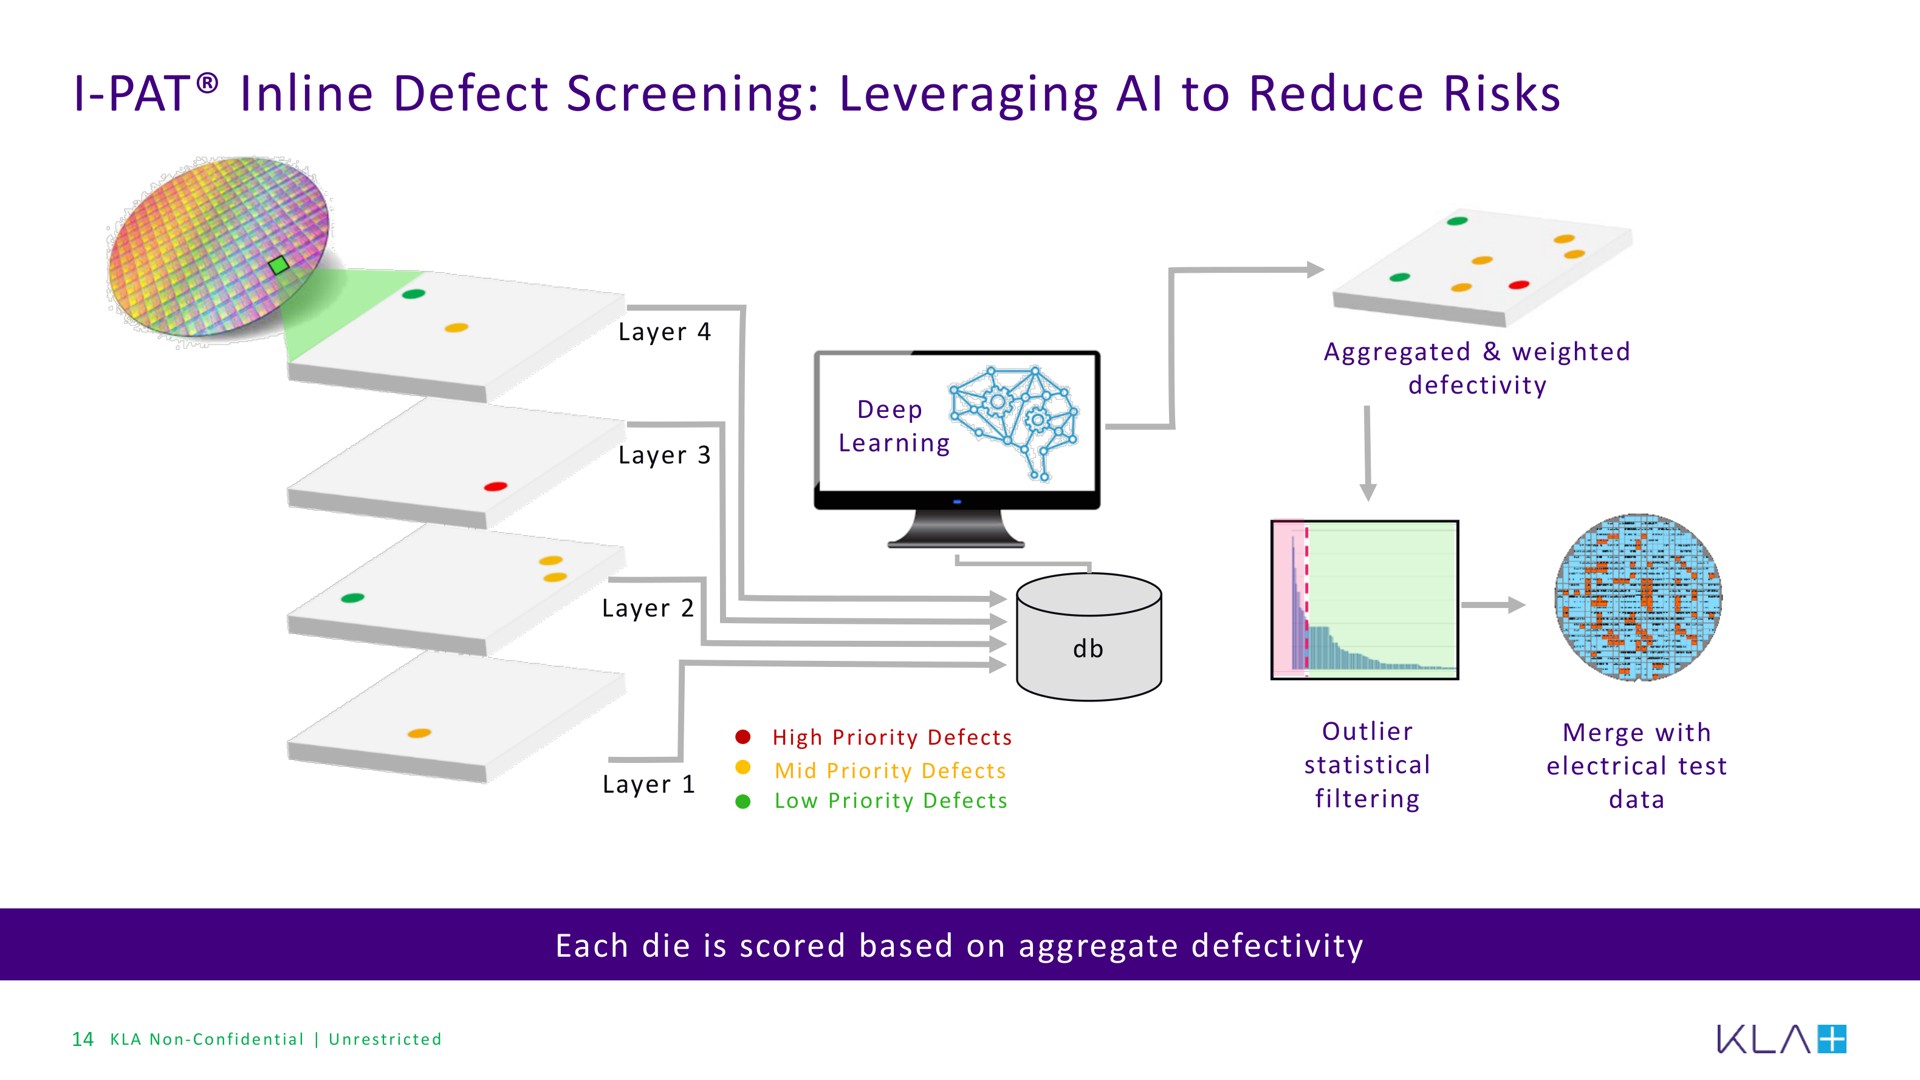 i pat defect screening leveraging to reduce risks | KLA